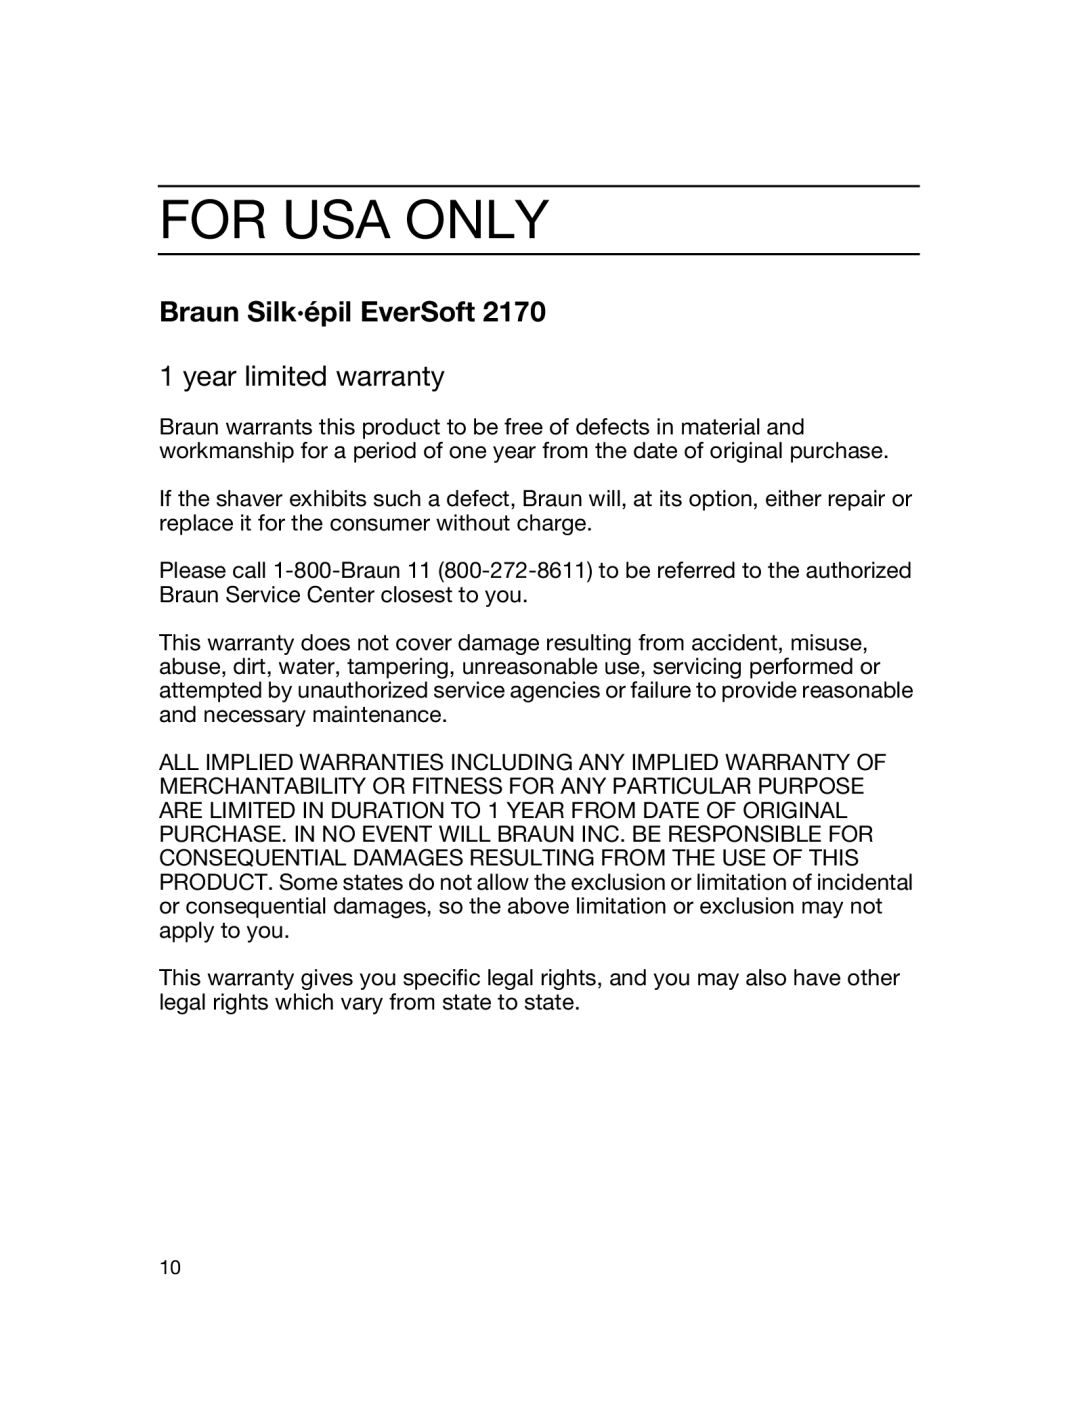 Braun 5316 manual For Usa Only, Braun Silk·épil EverSoft, year limited warranty 